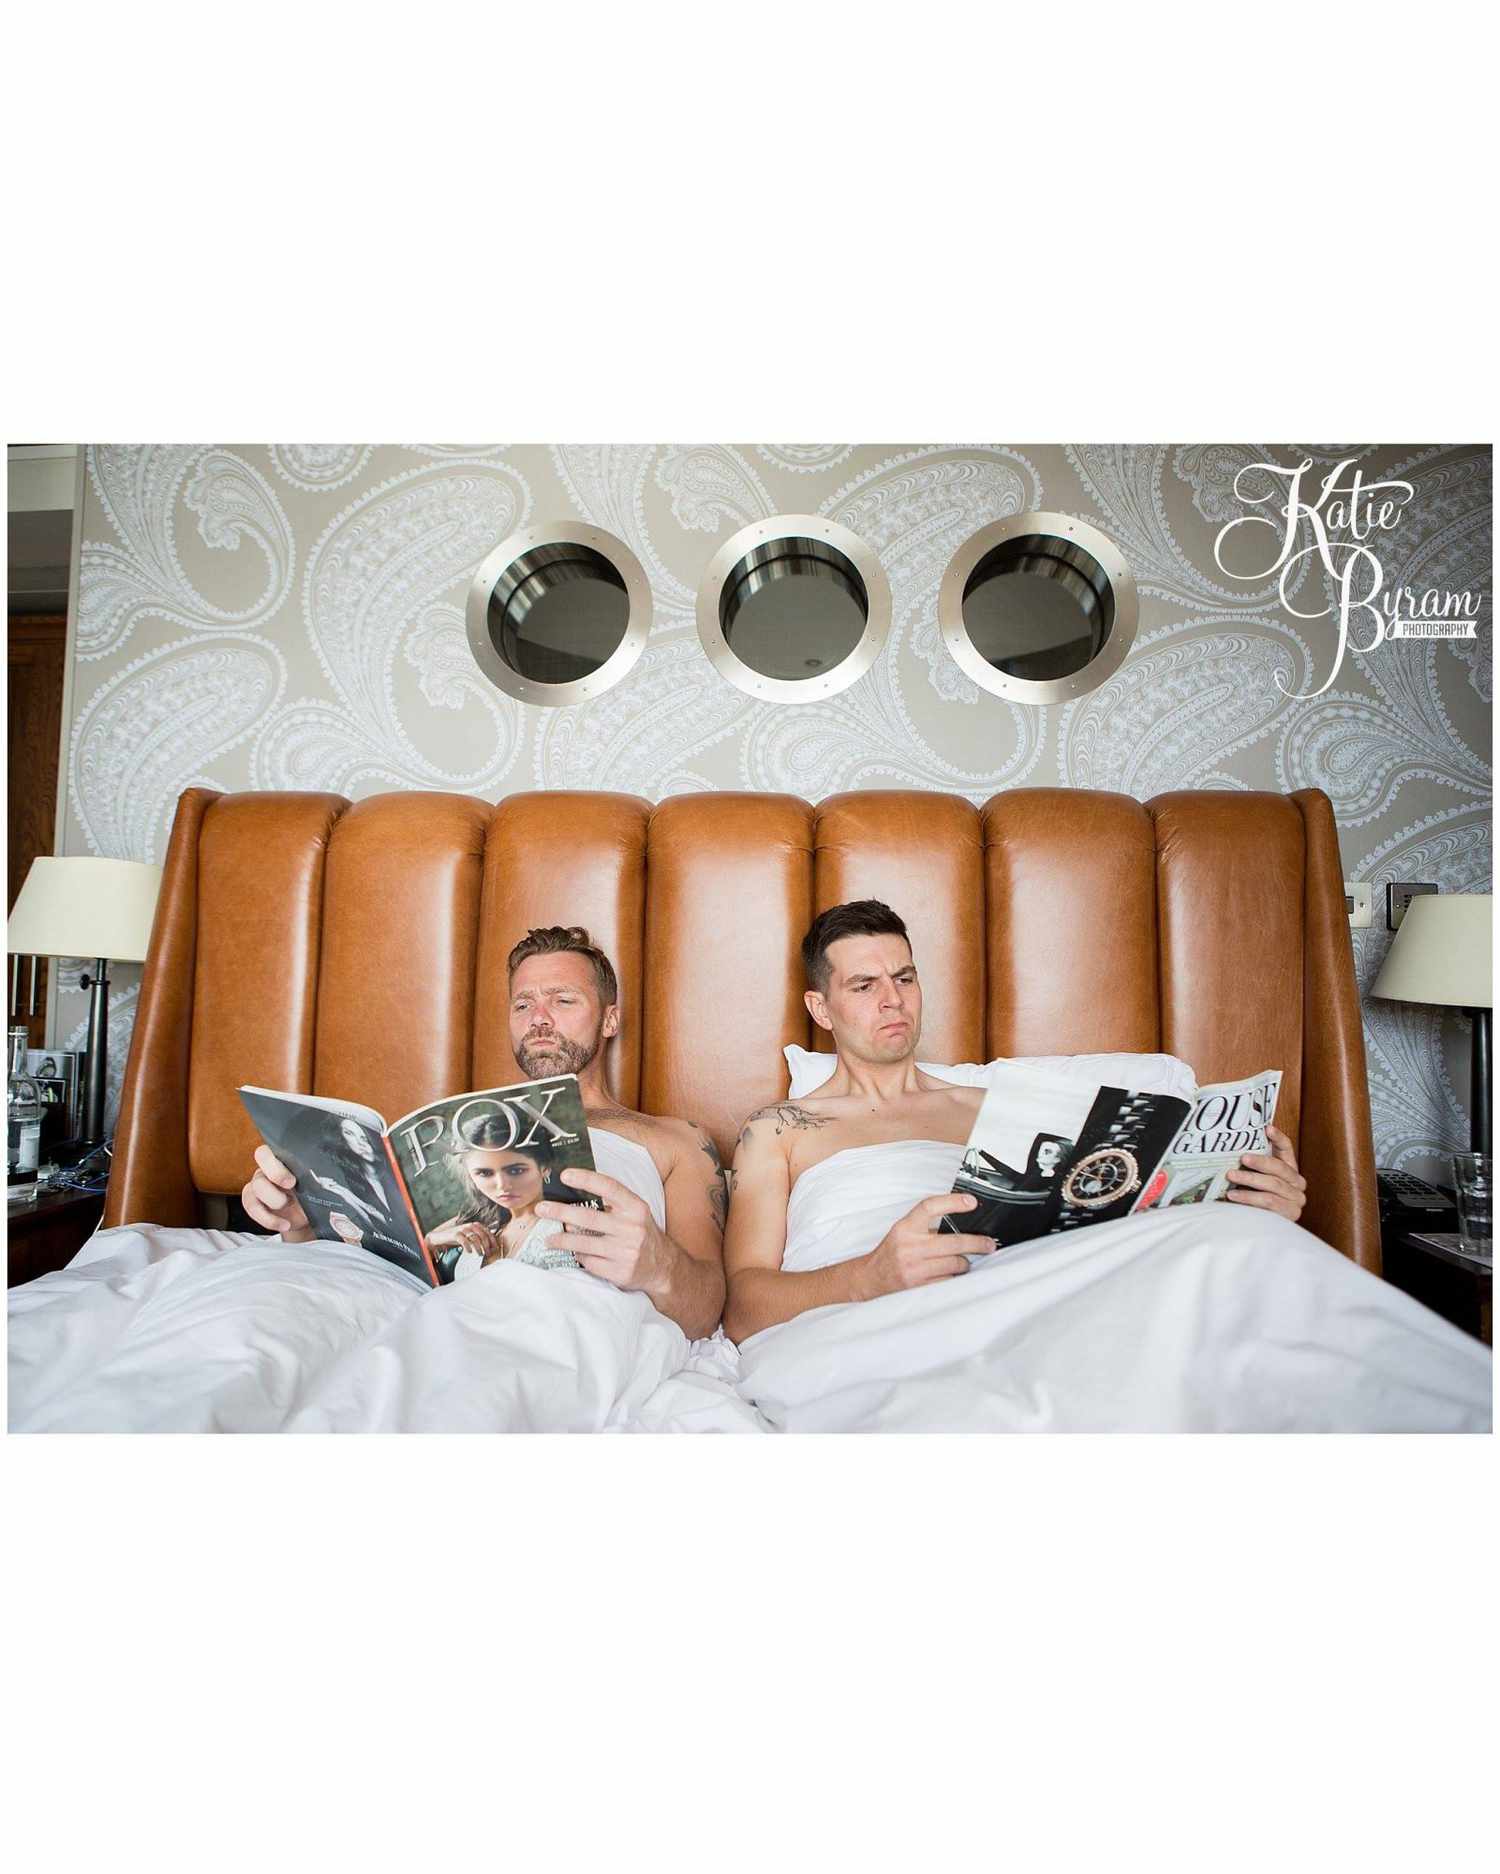 bromantic-photo-shoot-groom-best-man-in-bed-1215.jpg